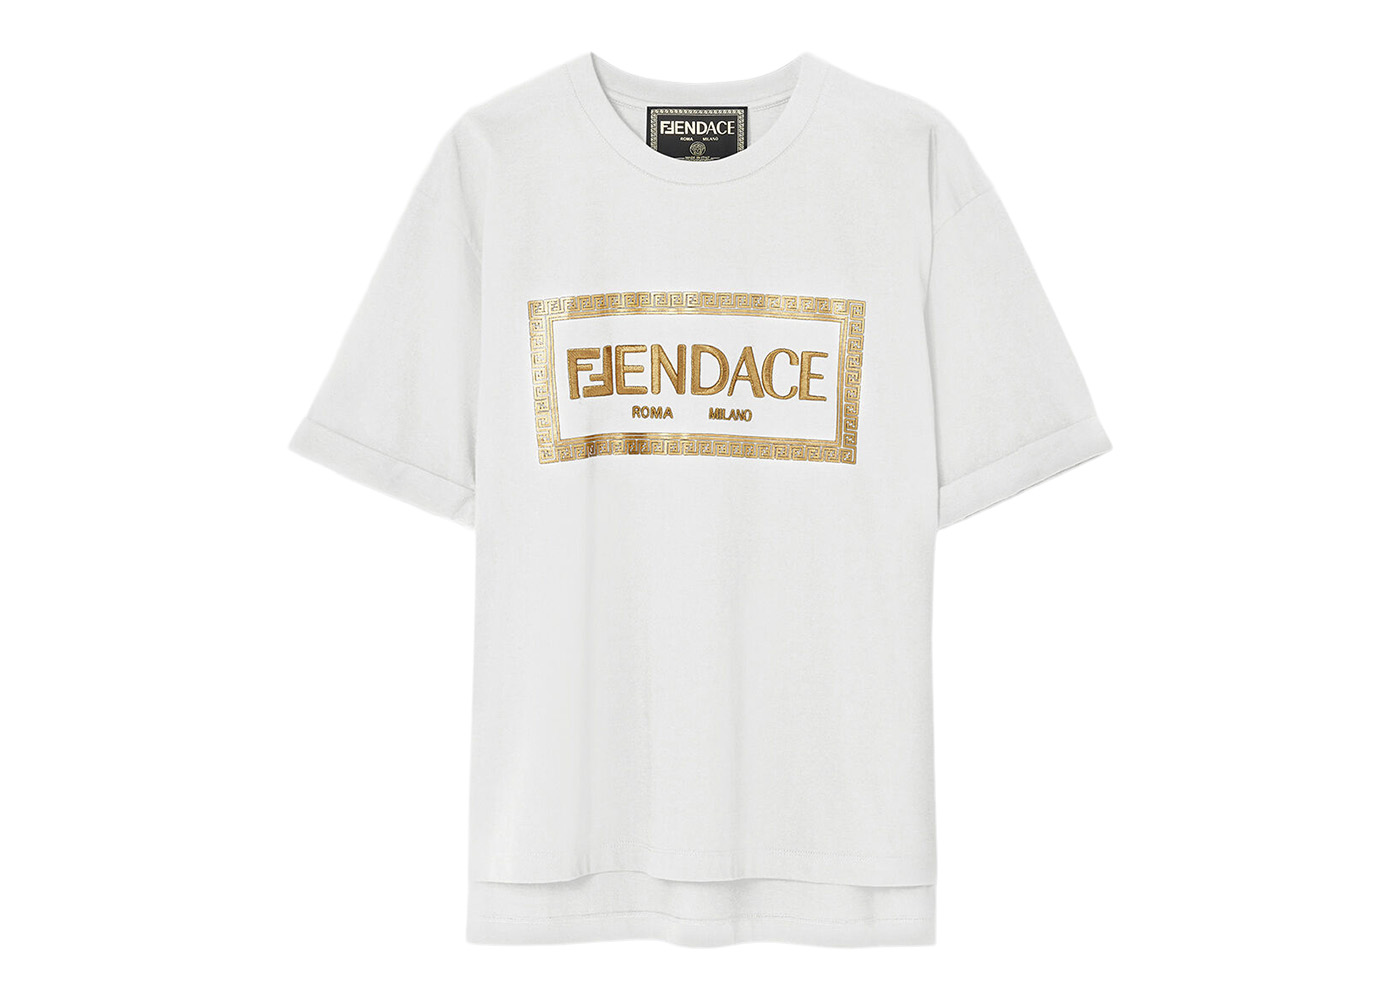 FENDACE FENDI×FERSACE Tシャツ ホワイト Lサイズ限定コラボ商品です